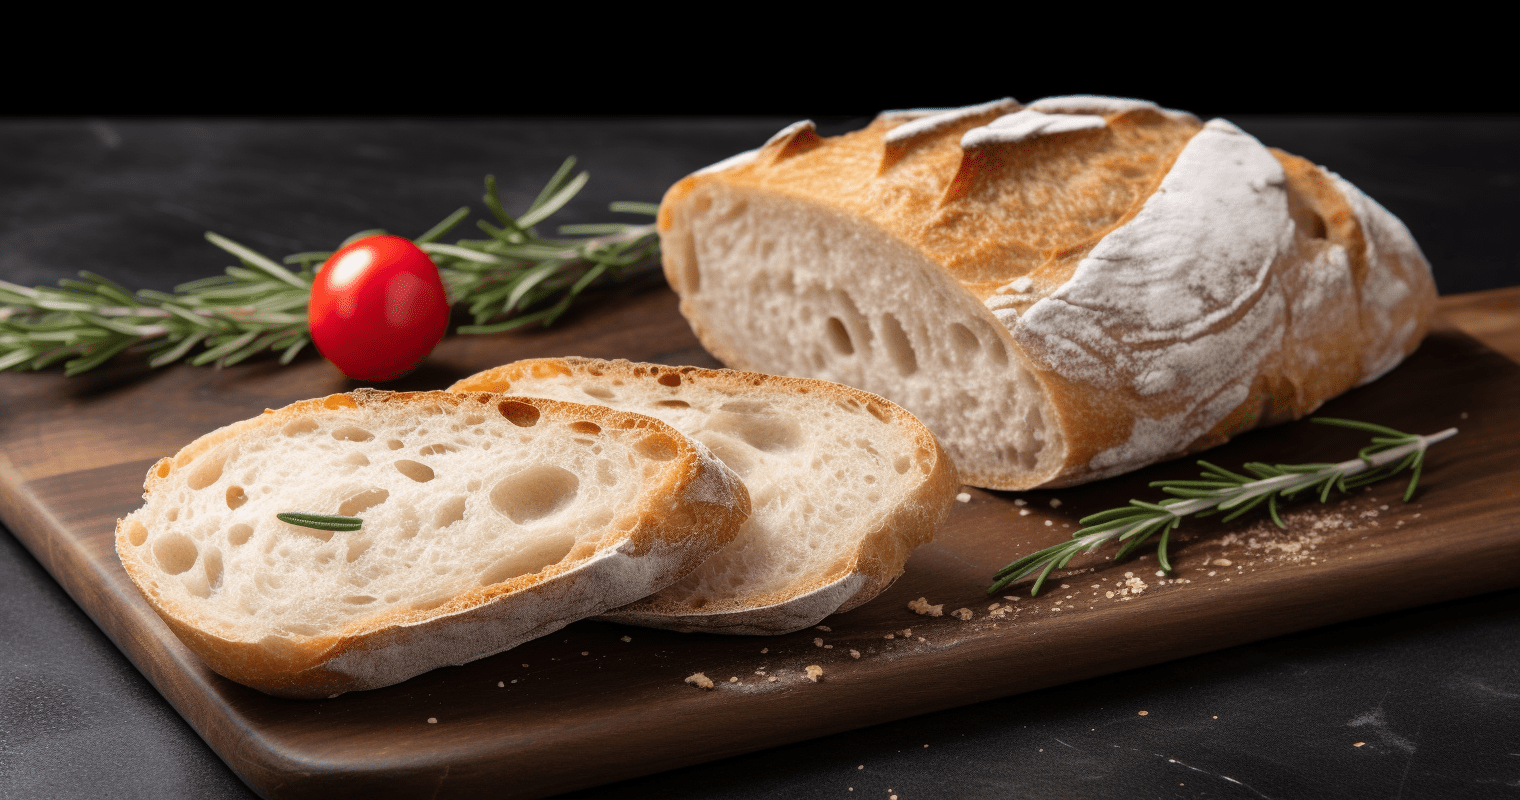 Image of sliced sourdough bread